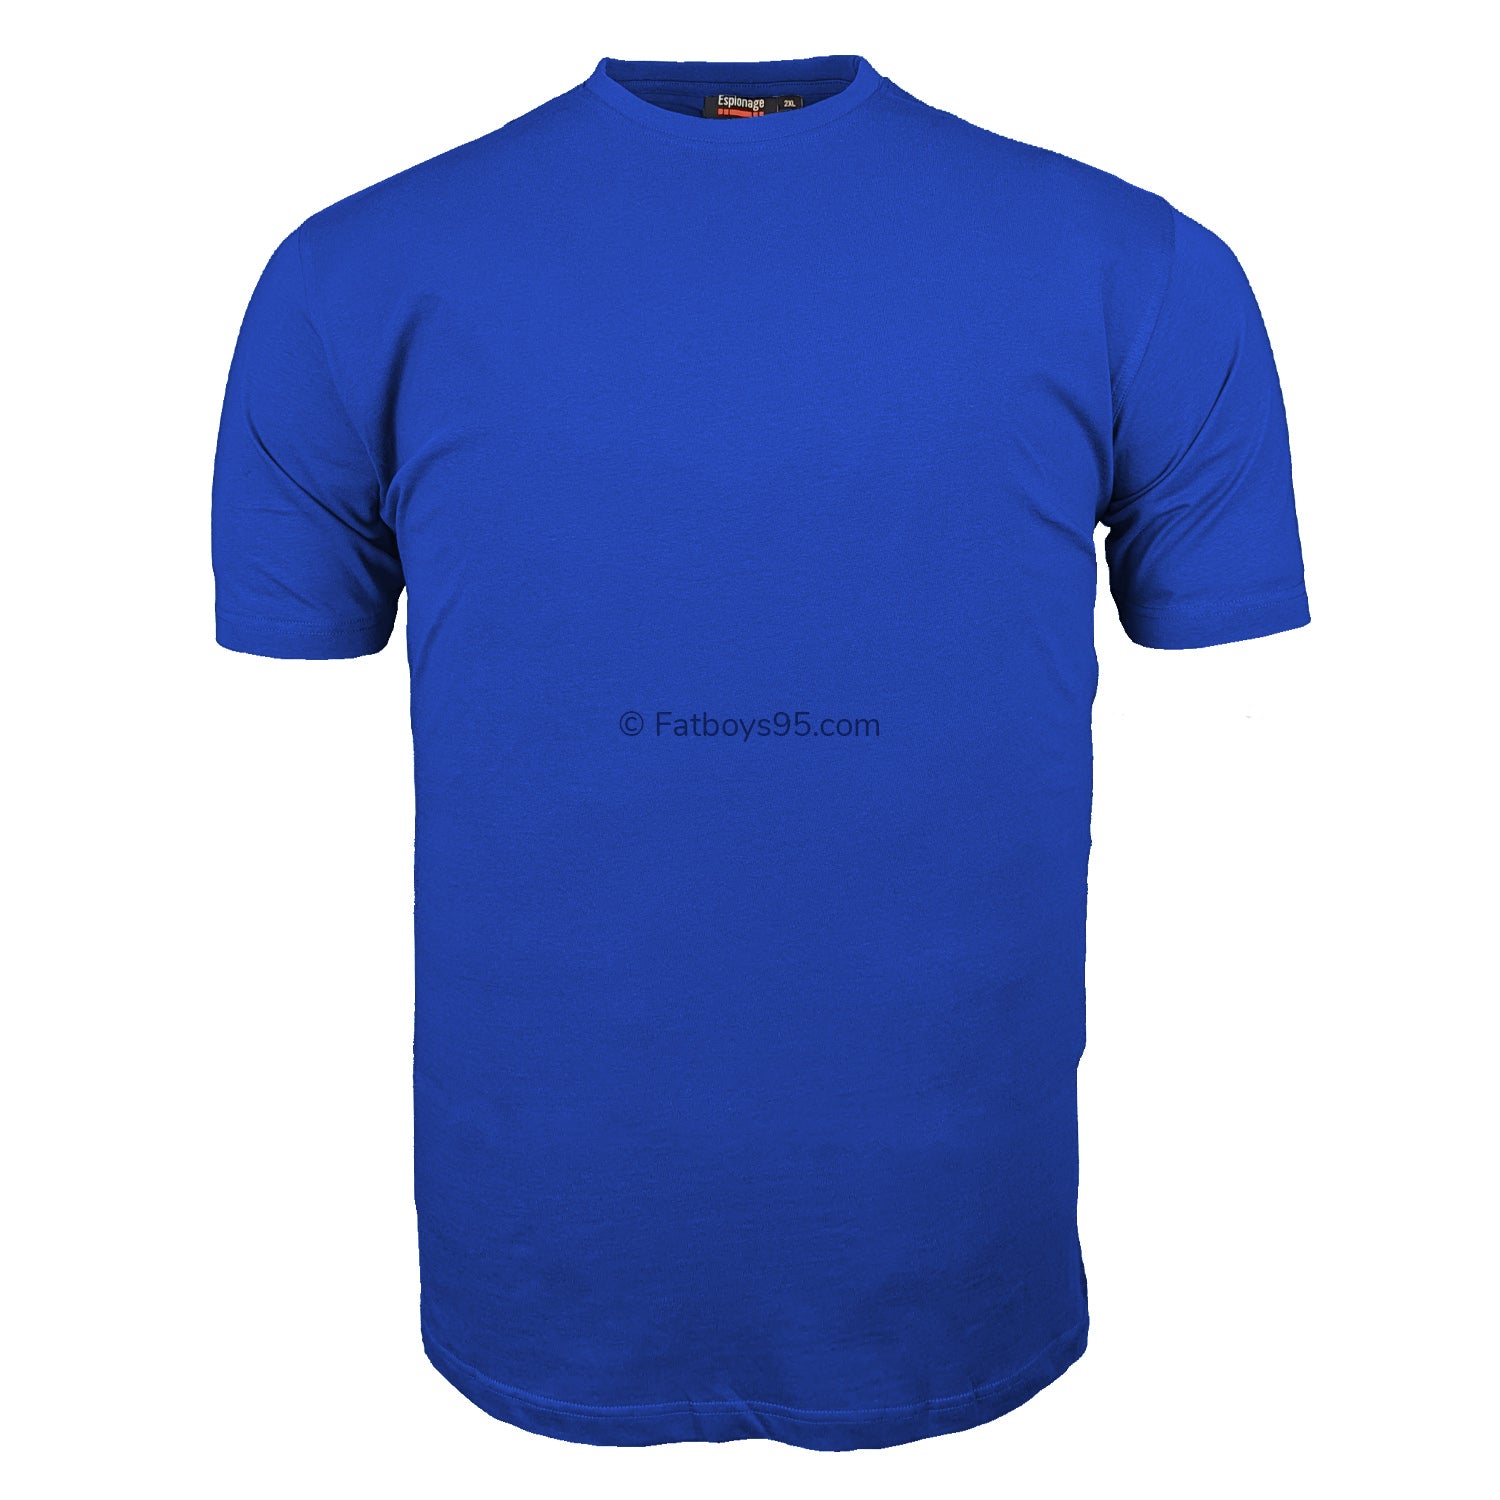 Espionage Plain Round Neck T-Shirt - T015 - Royal 1